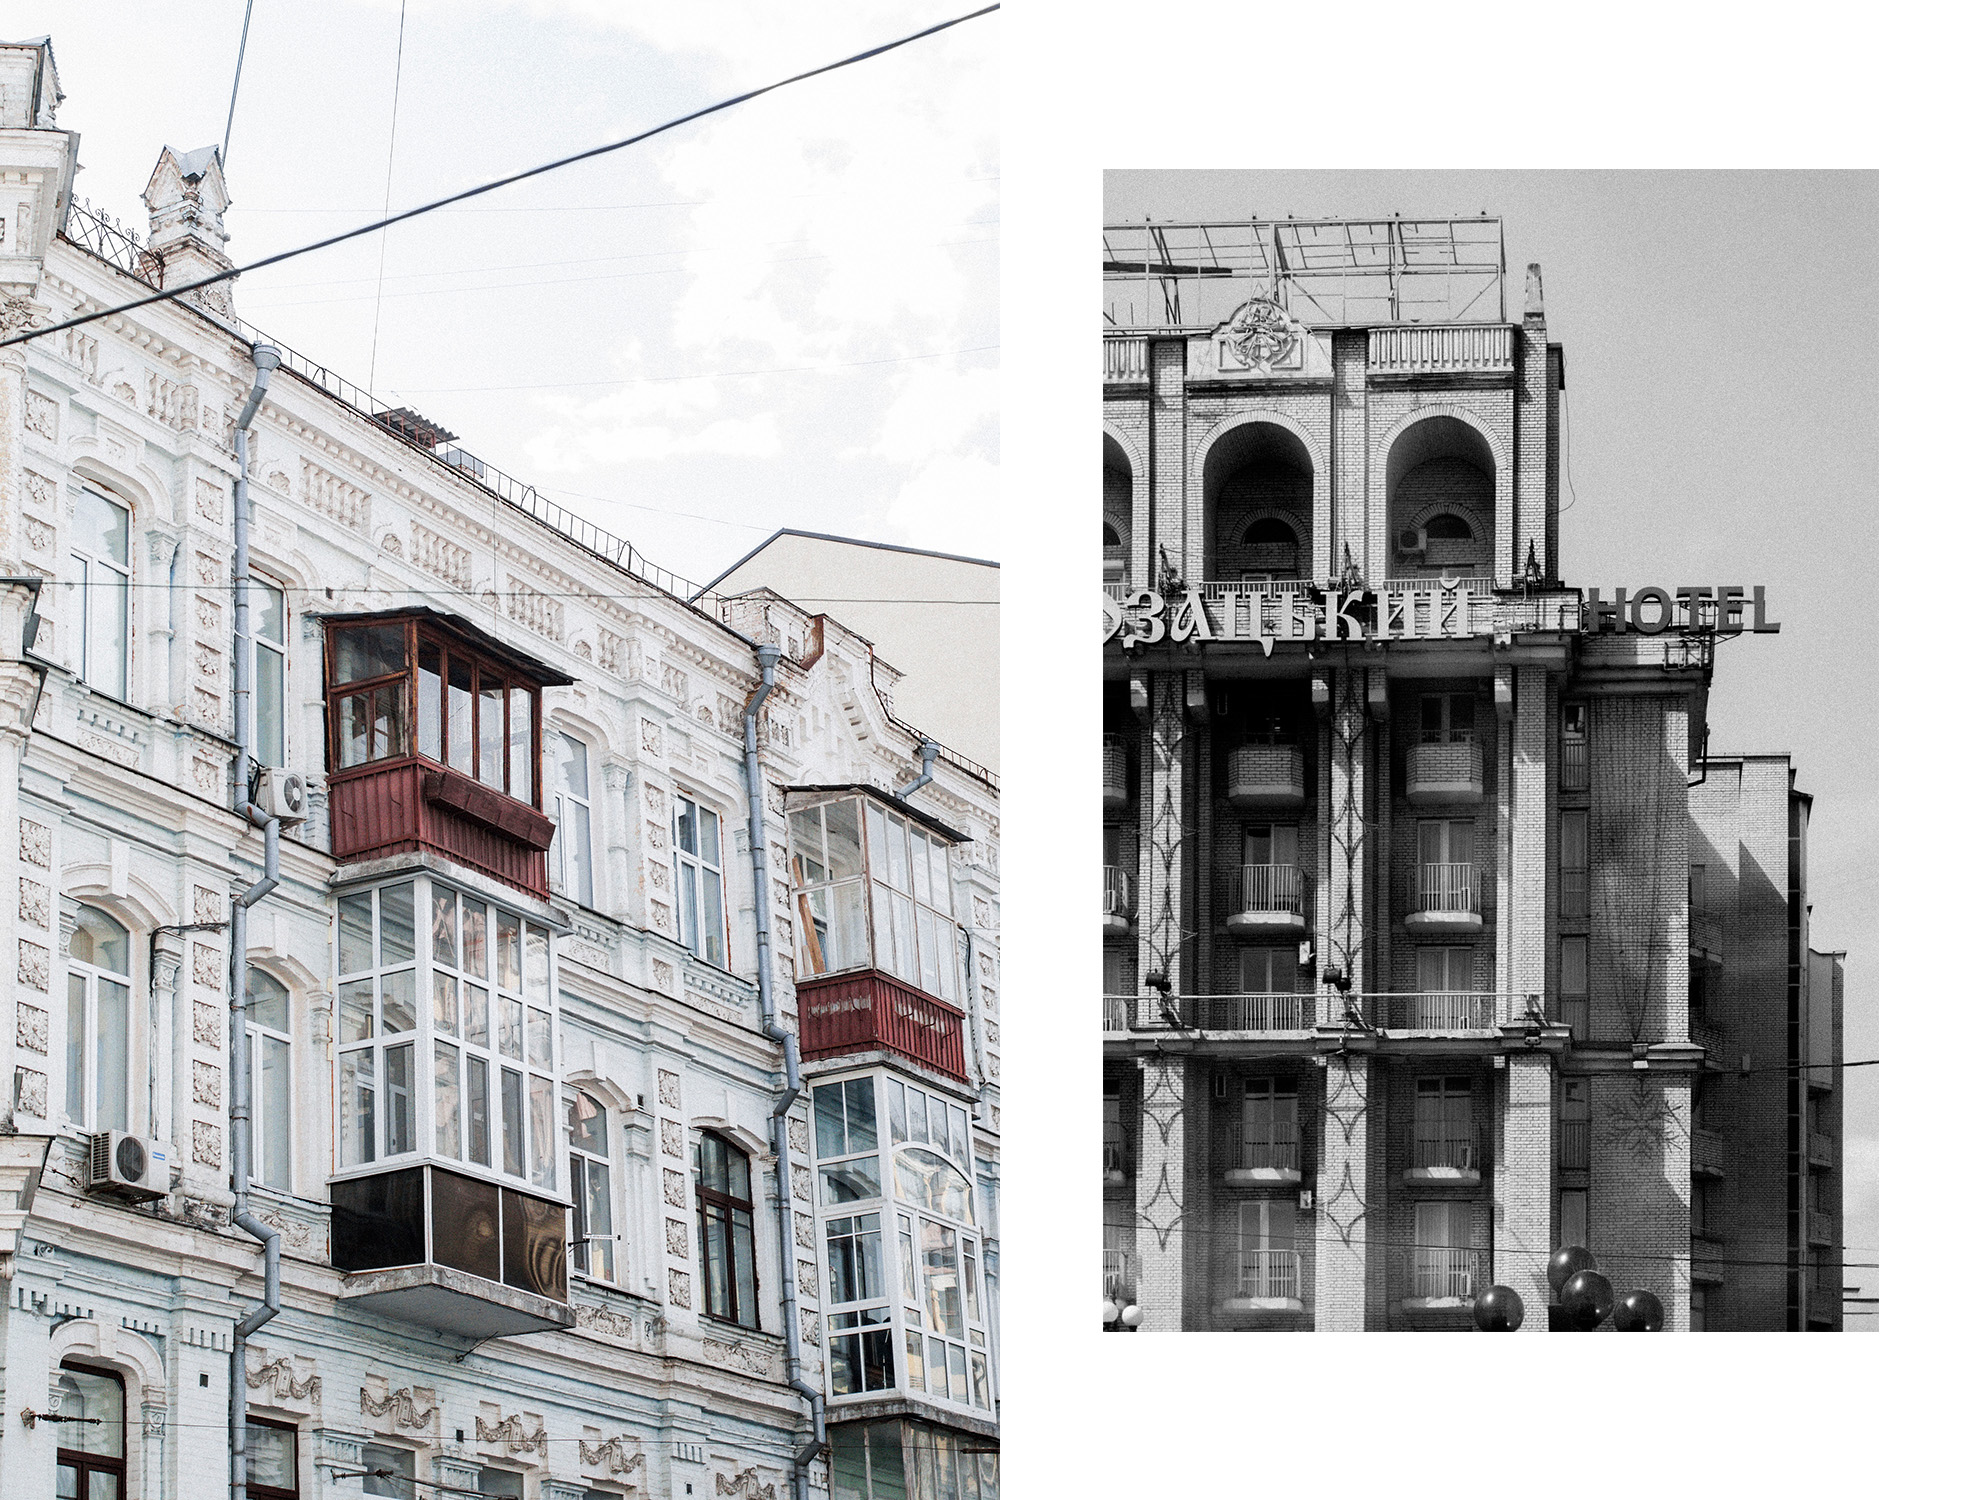 Kyiv's Architecture / Ukraine Travel Diary - IheartAlice.com